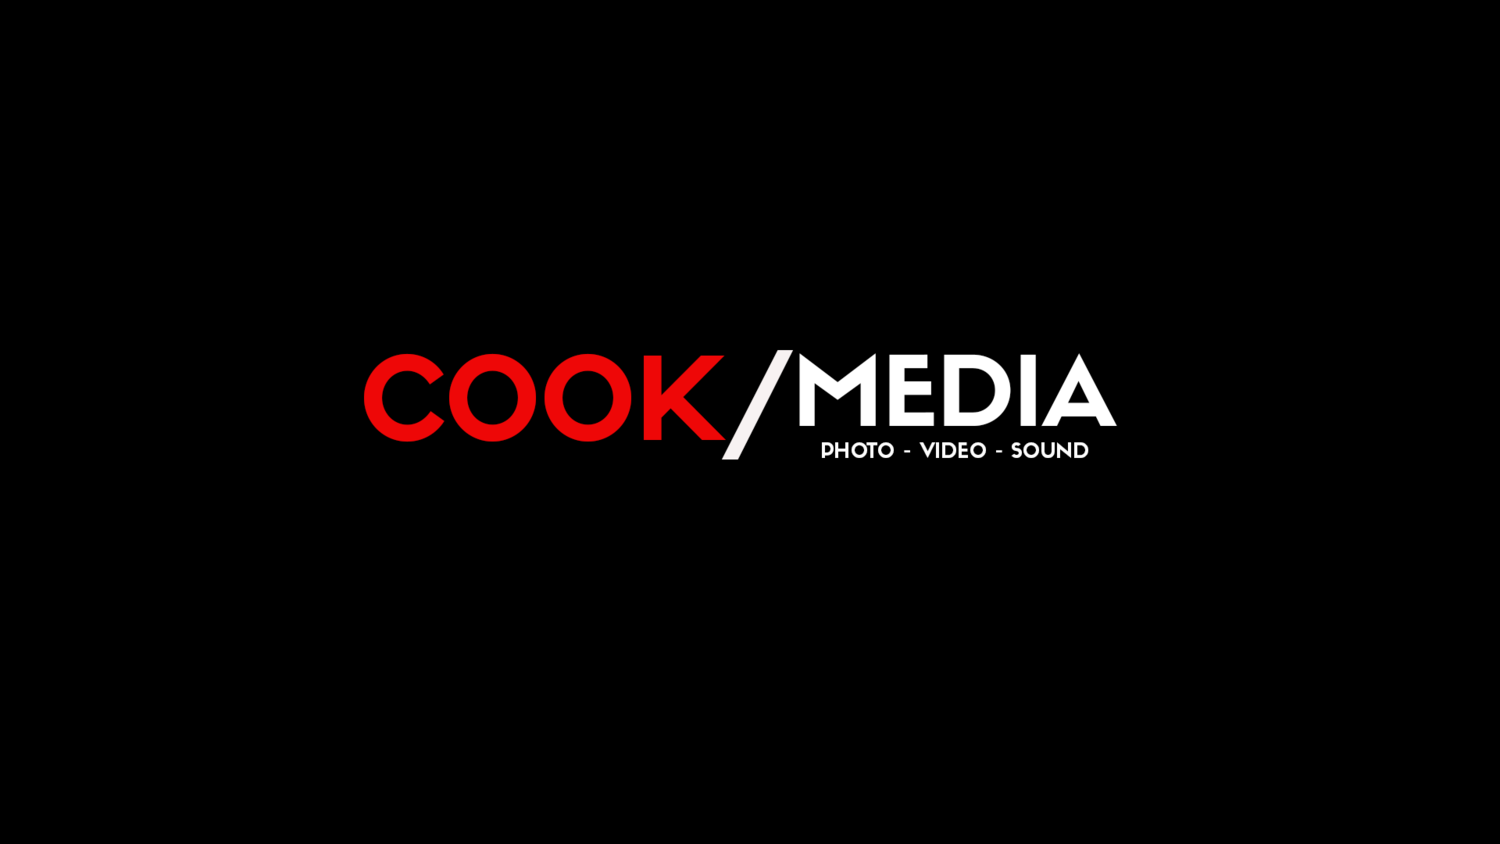 Cook/Media